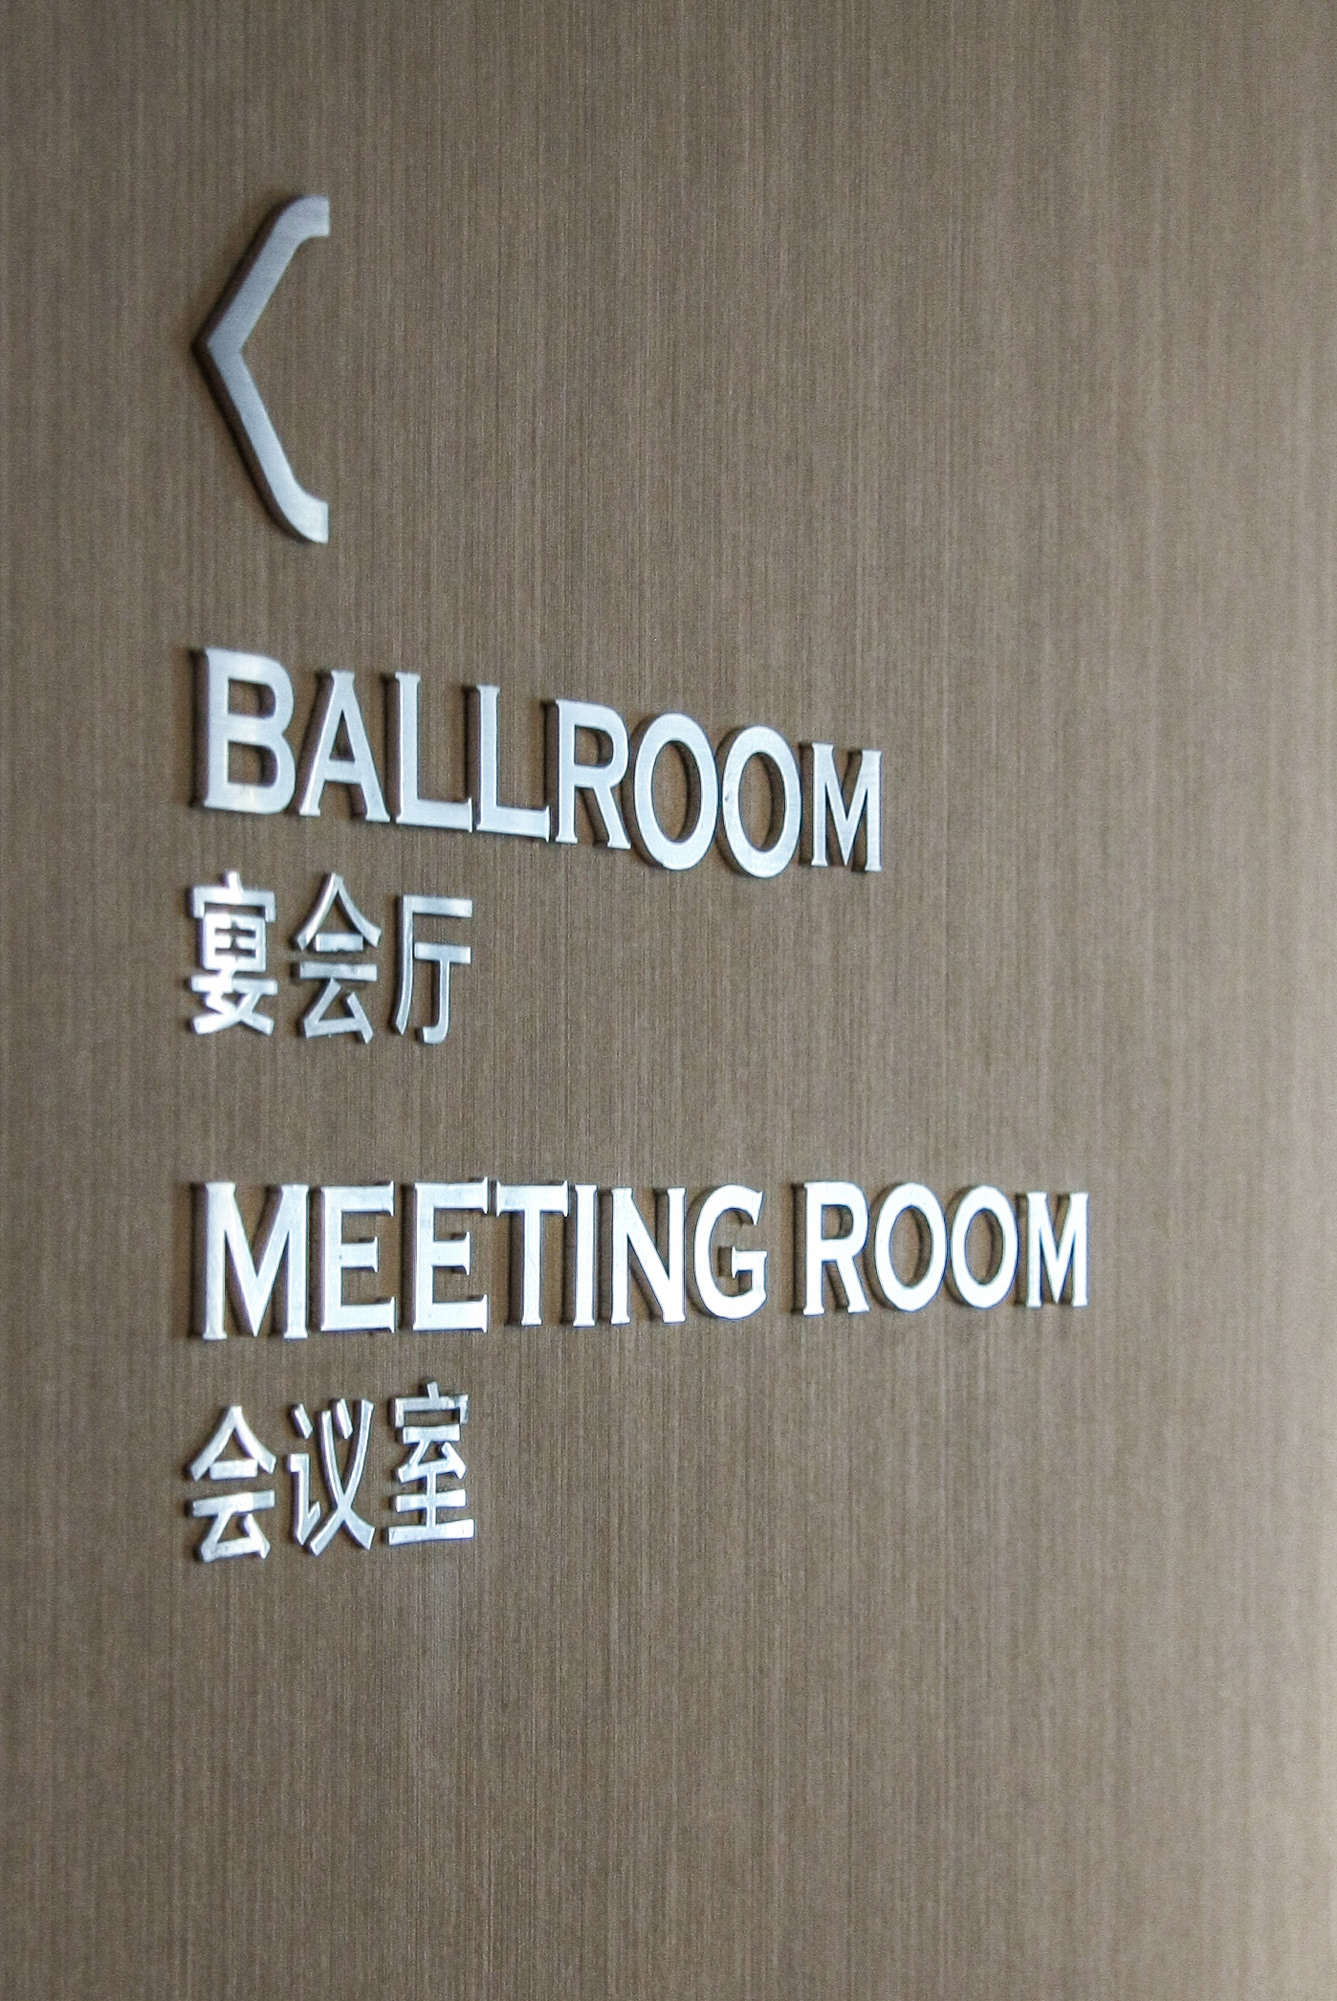 balise directionnelle indiquant meeting room et ballroom en inox